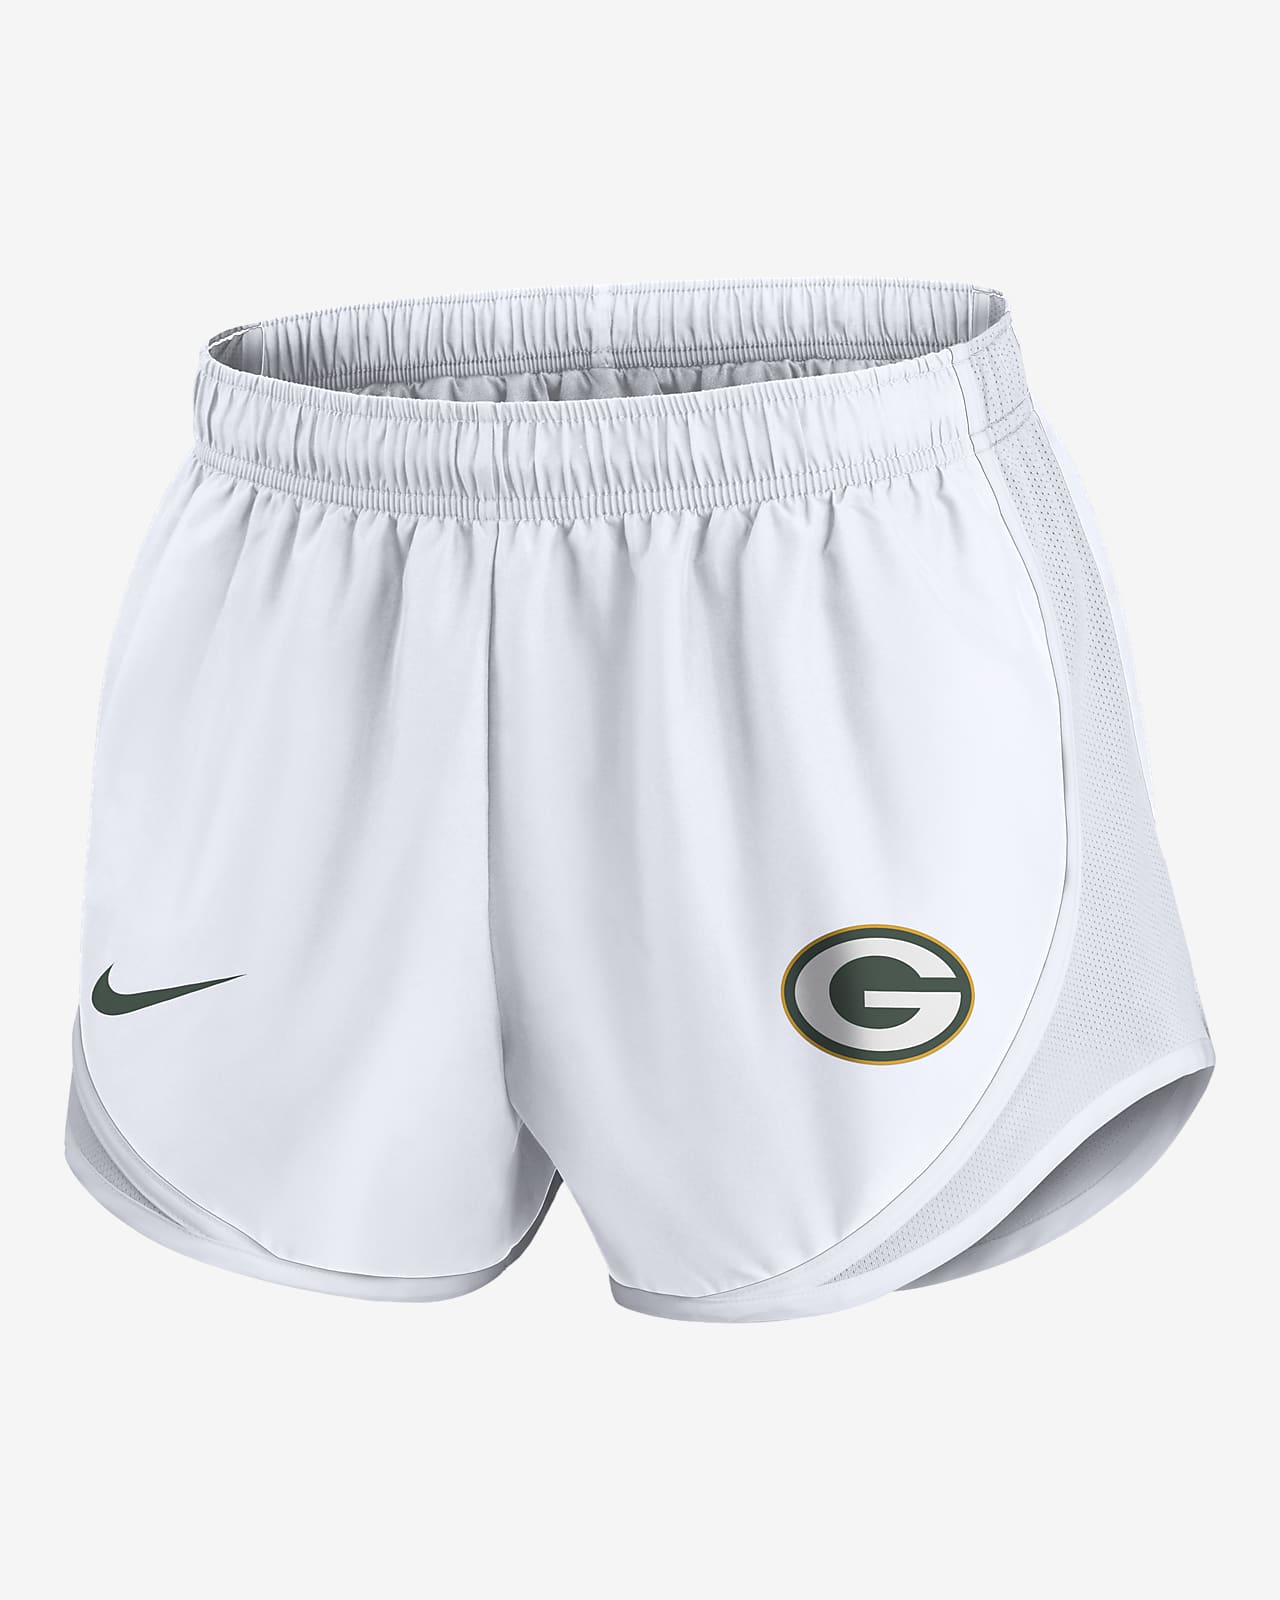 Shorts Nike Dri-FIT de la NFL para mujer Green Bay Packers Tempo